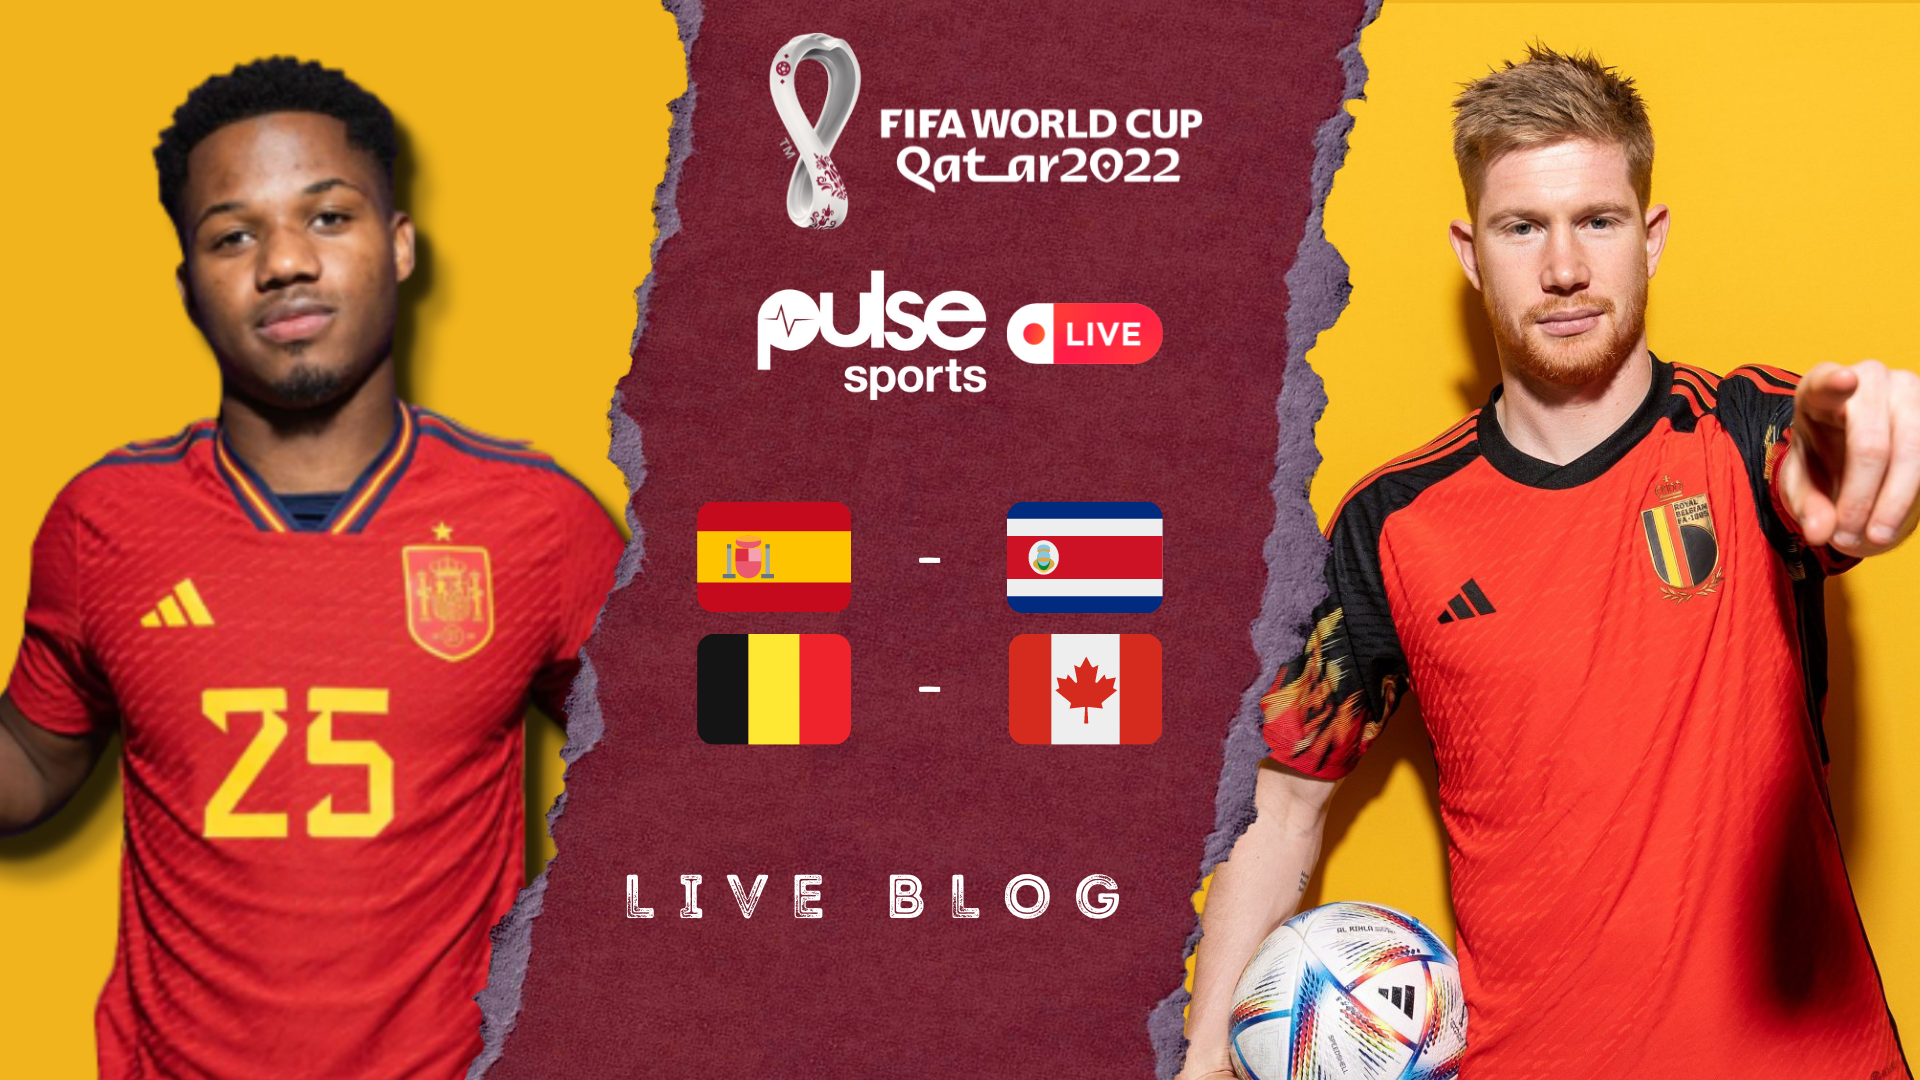 Qatar 2022 FIFA World Cup Day 4 Live Blog - Spain vs Costa Rica, Belgium vs Canada